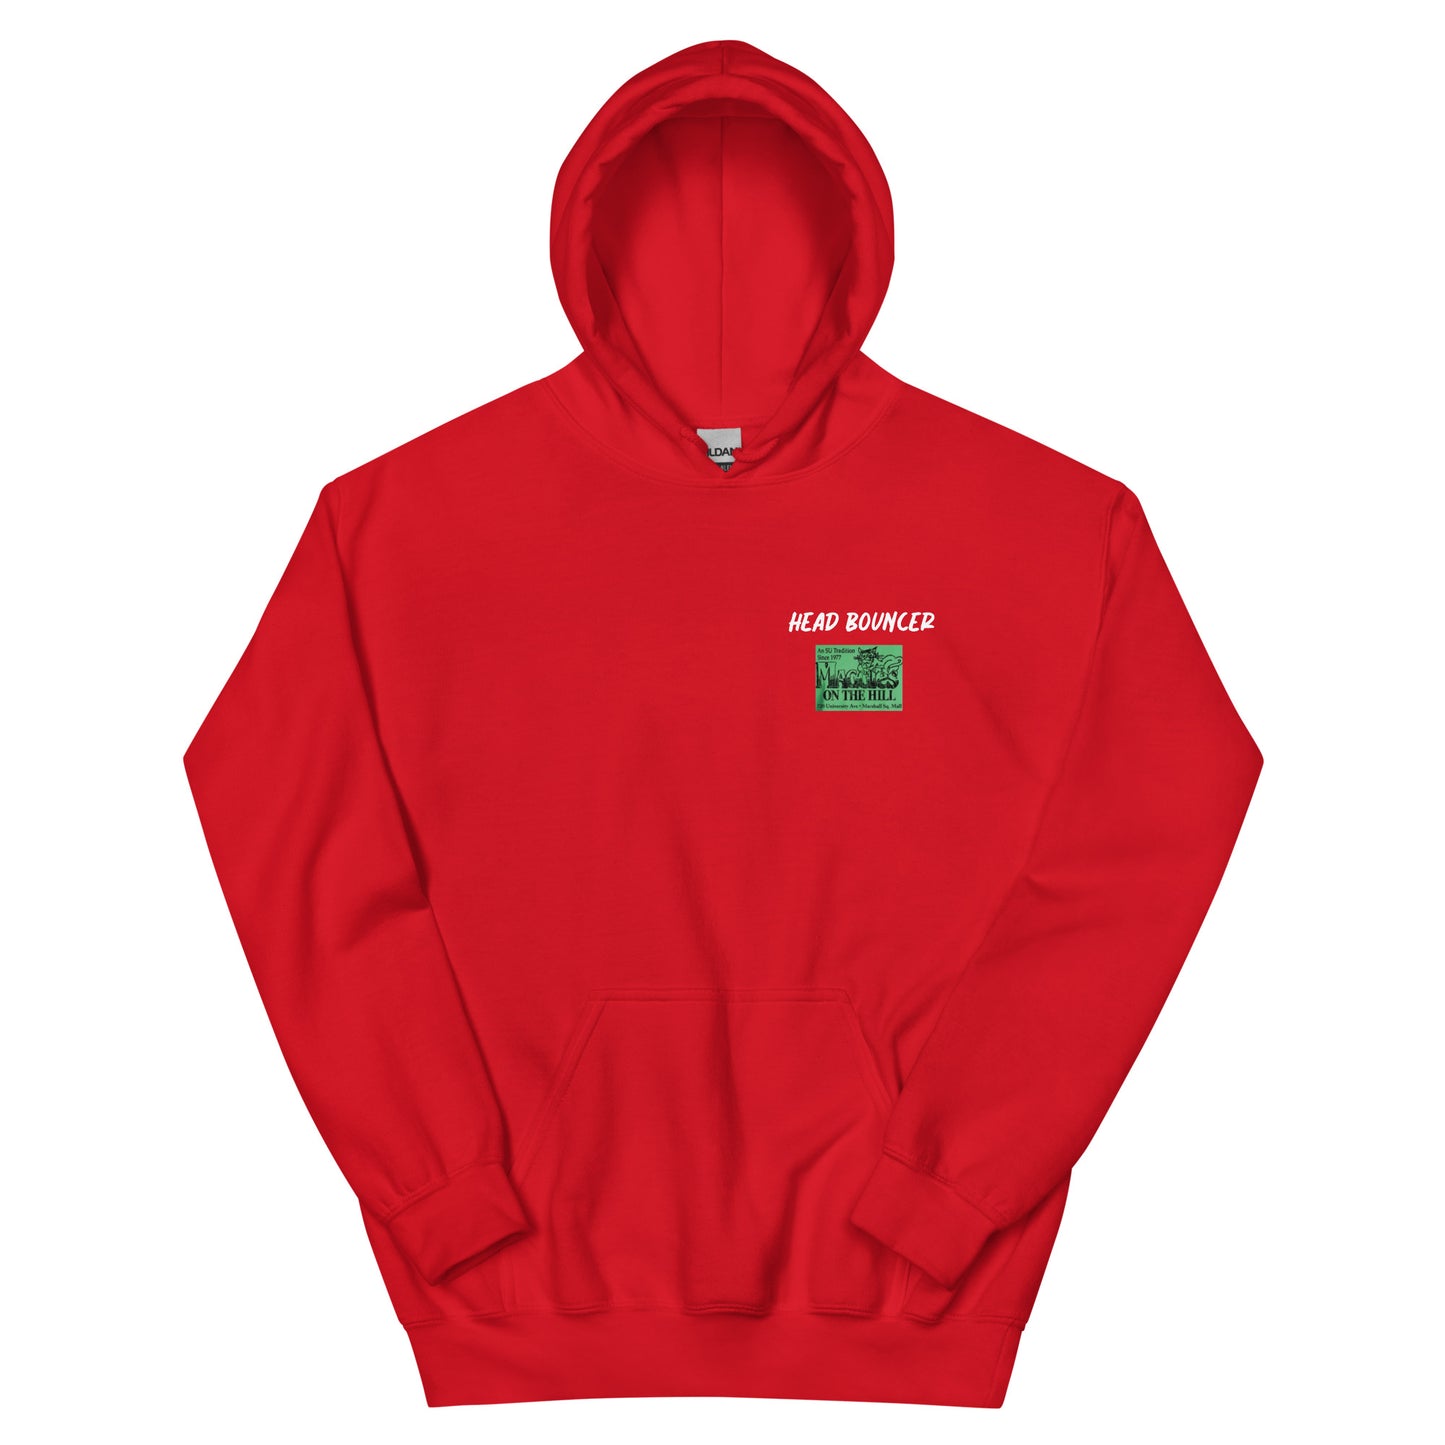 Best men's red sweatshirt graphic hoodie with warm pouch